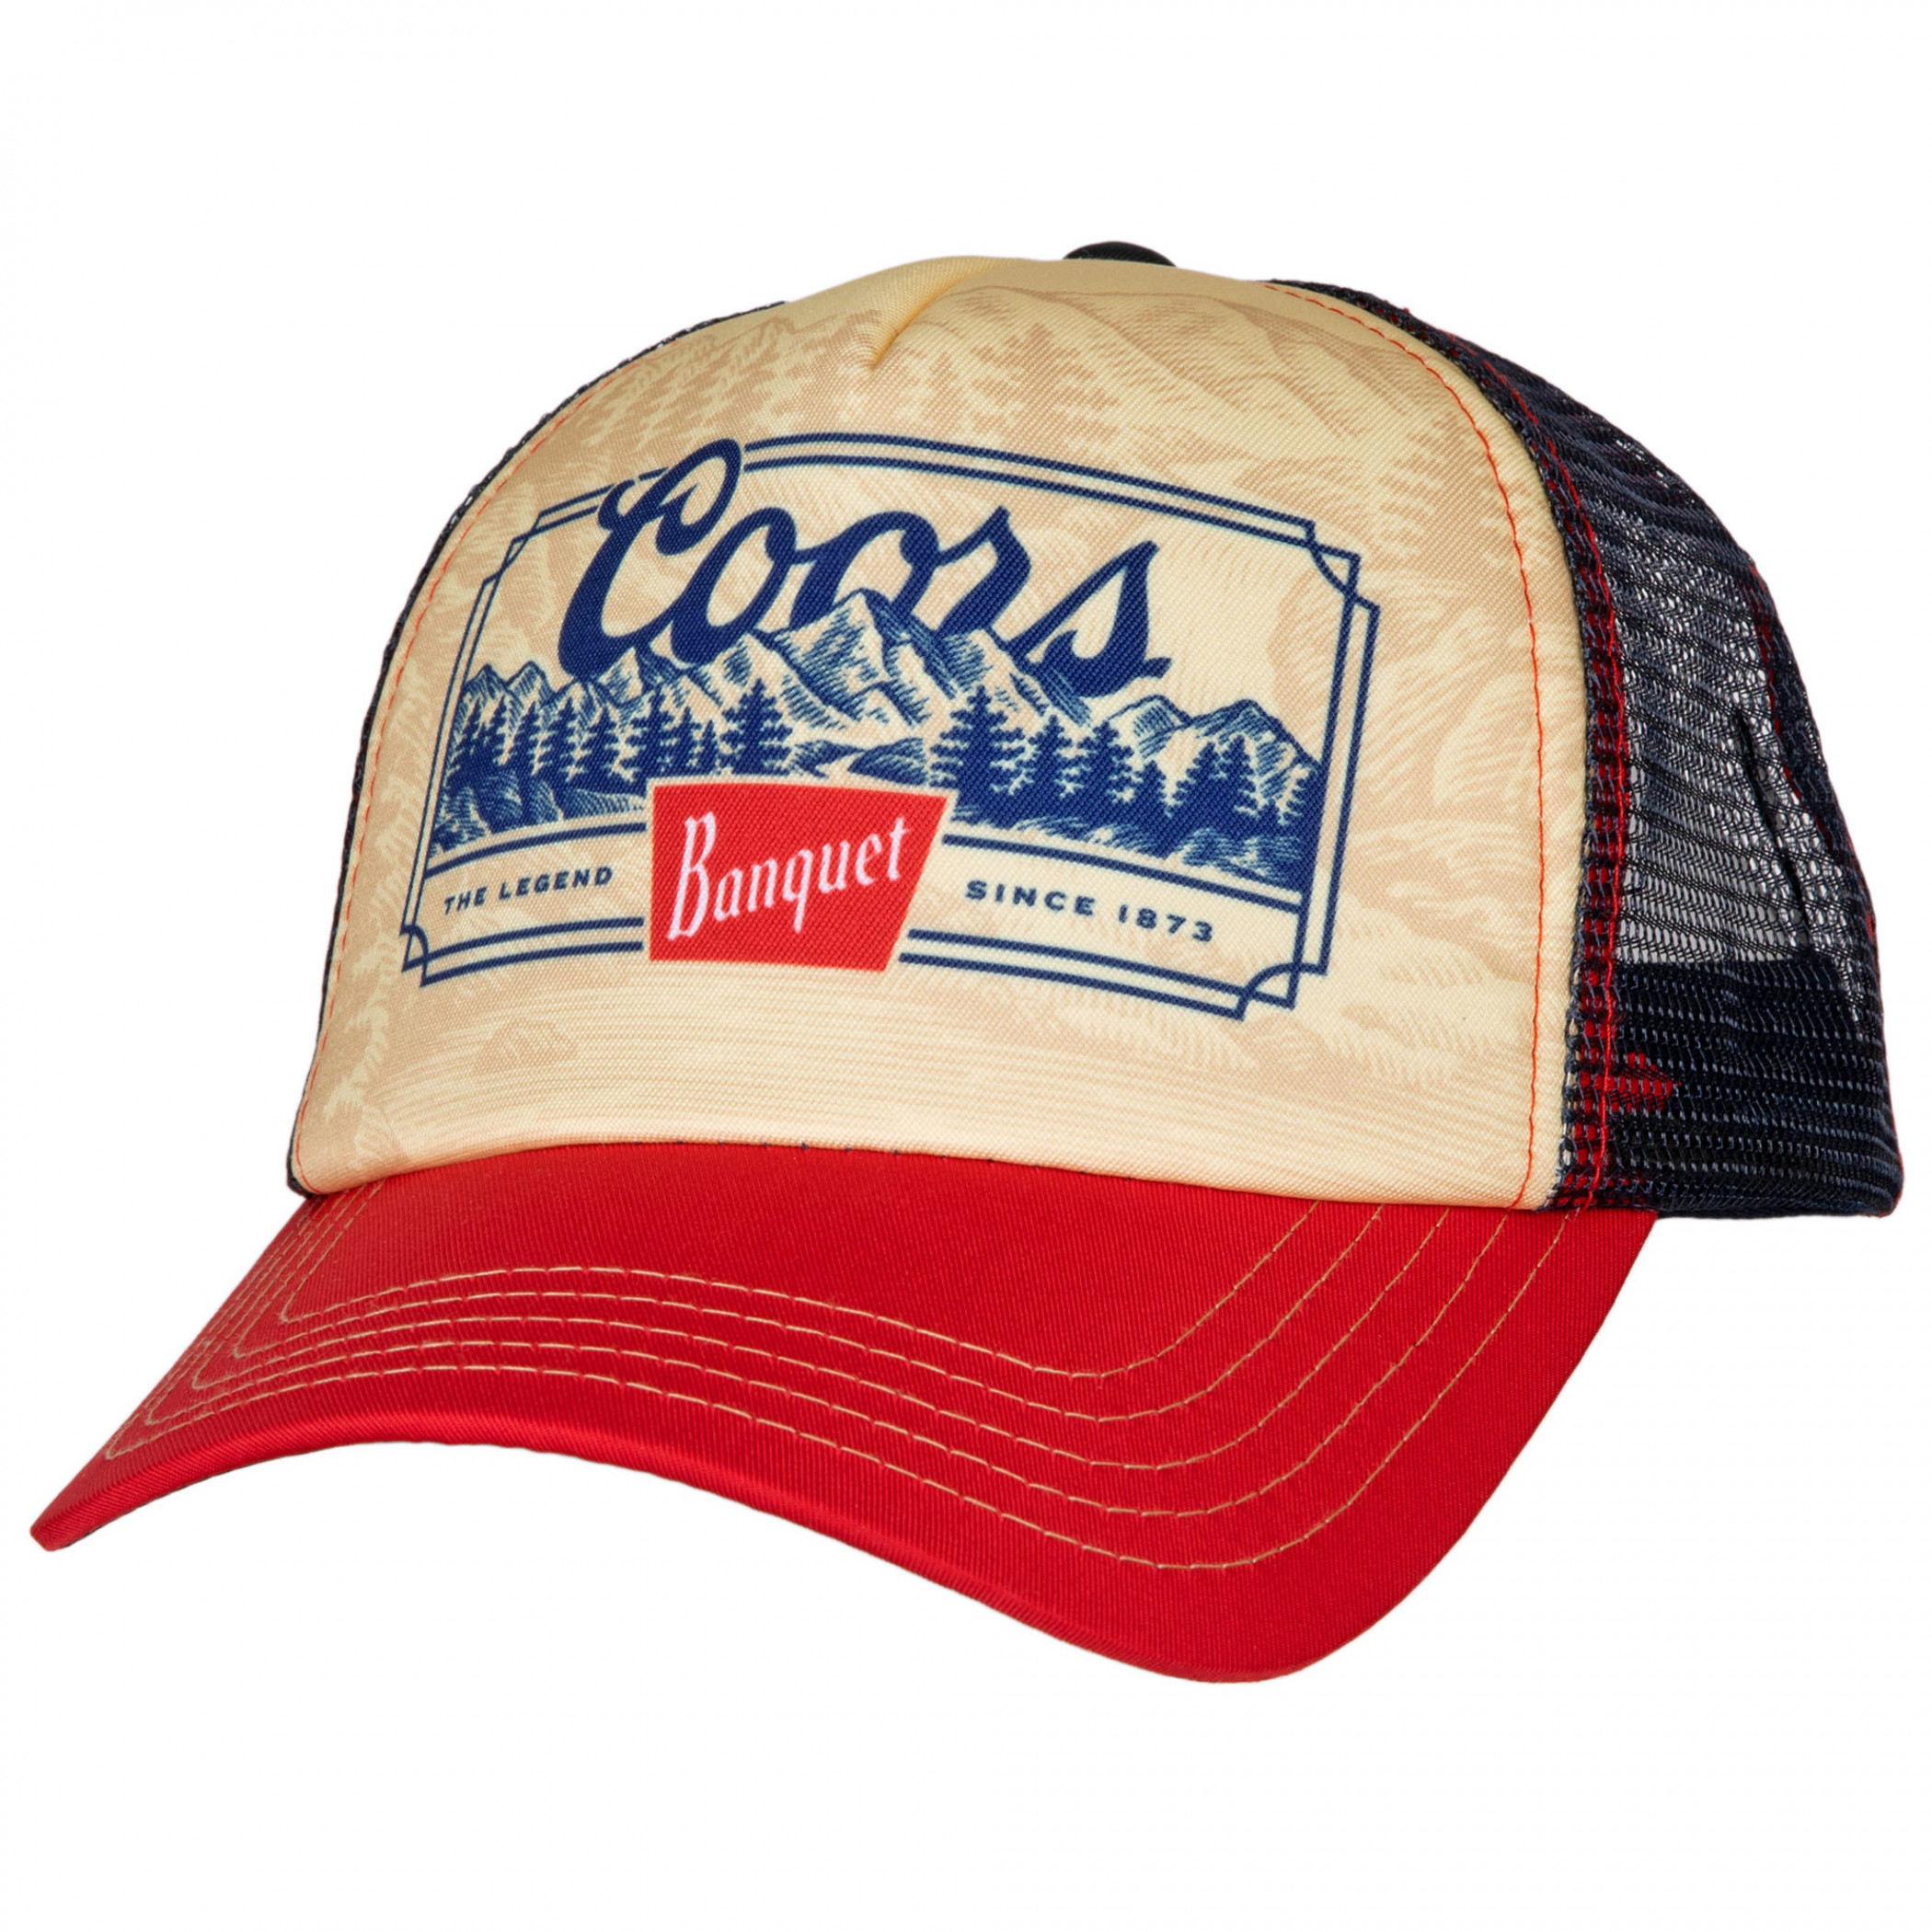 Coors Banquet Mesh Back Snapback Trucker Hat